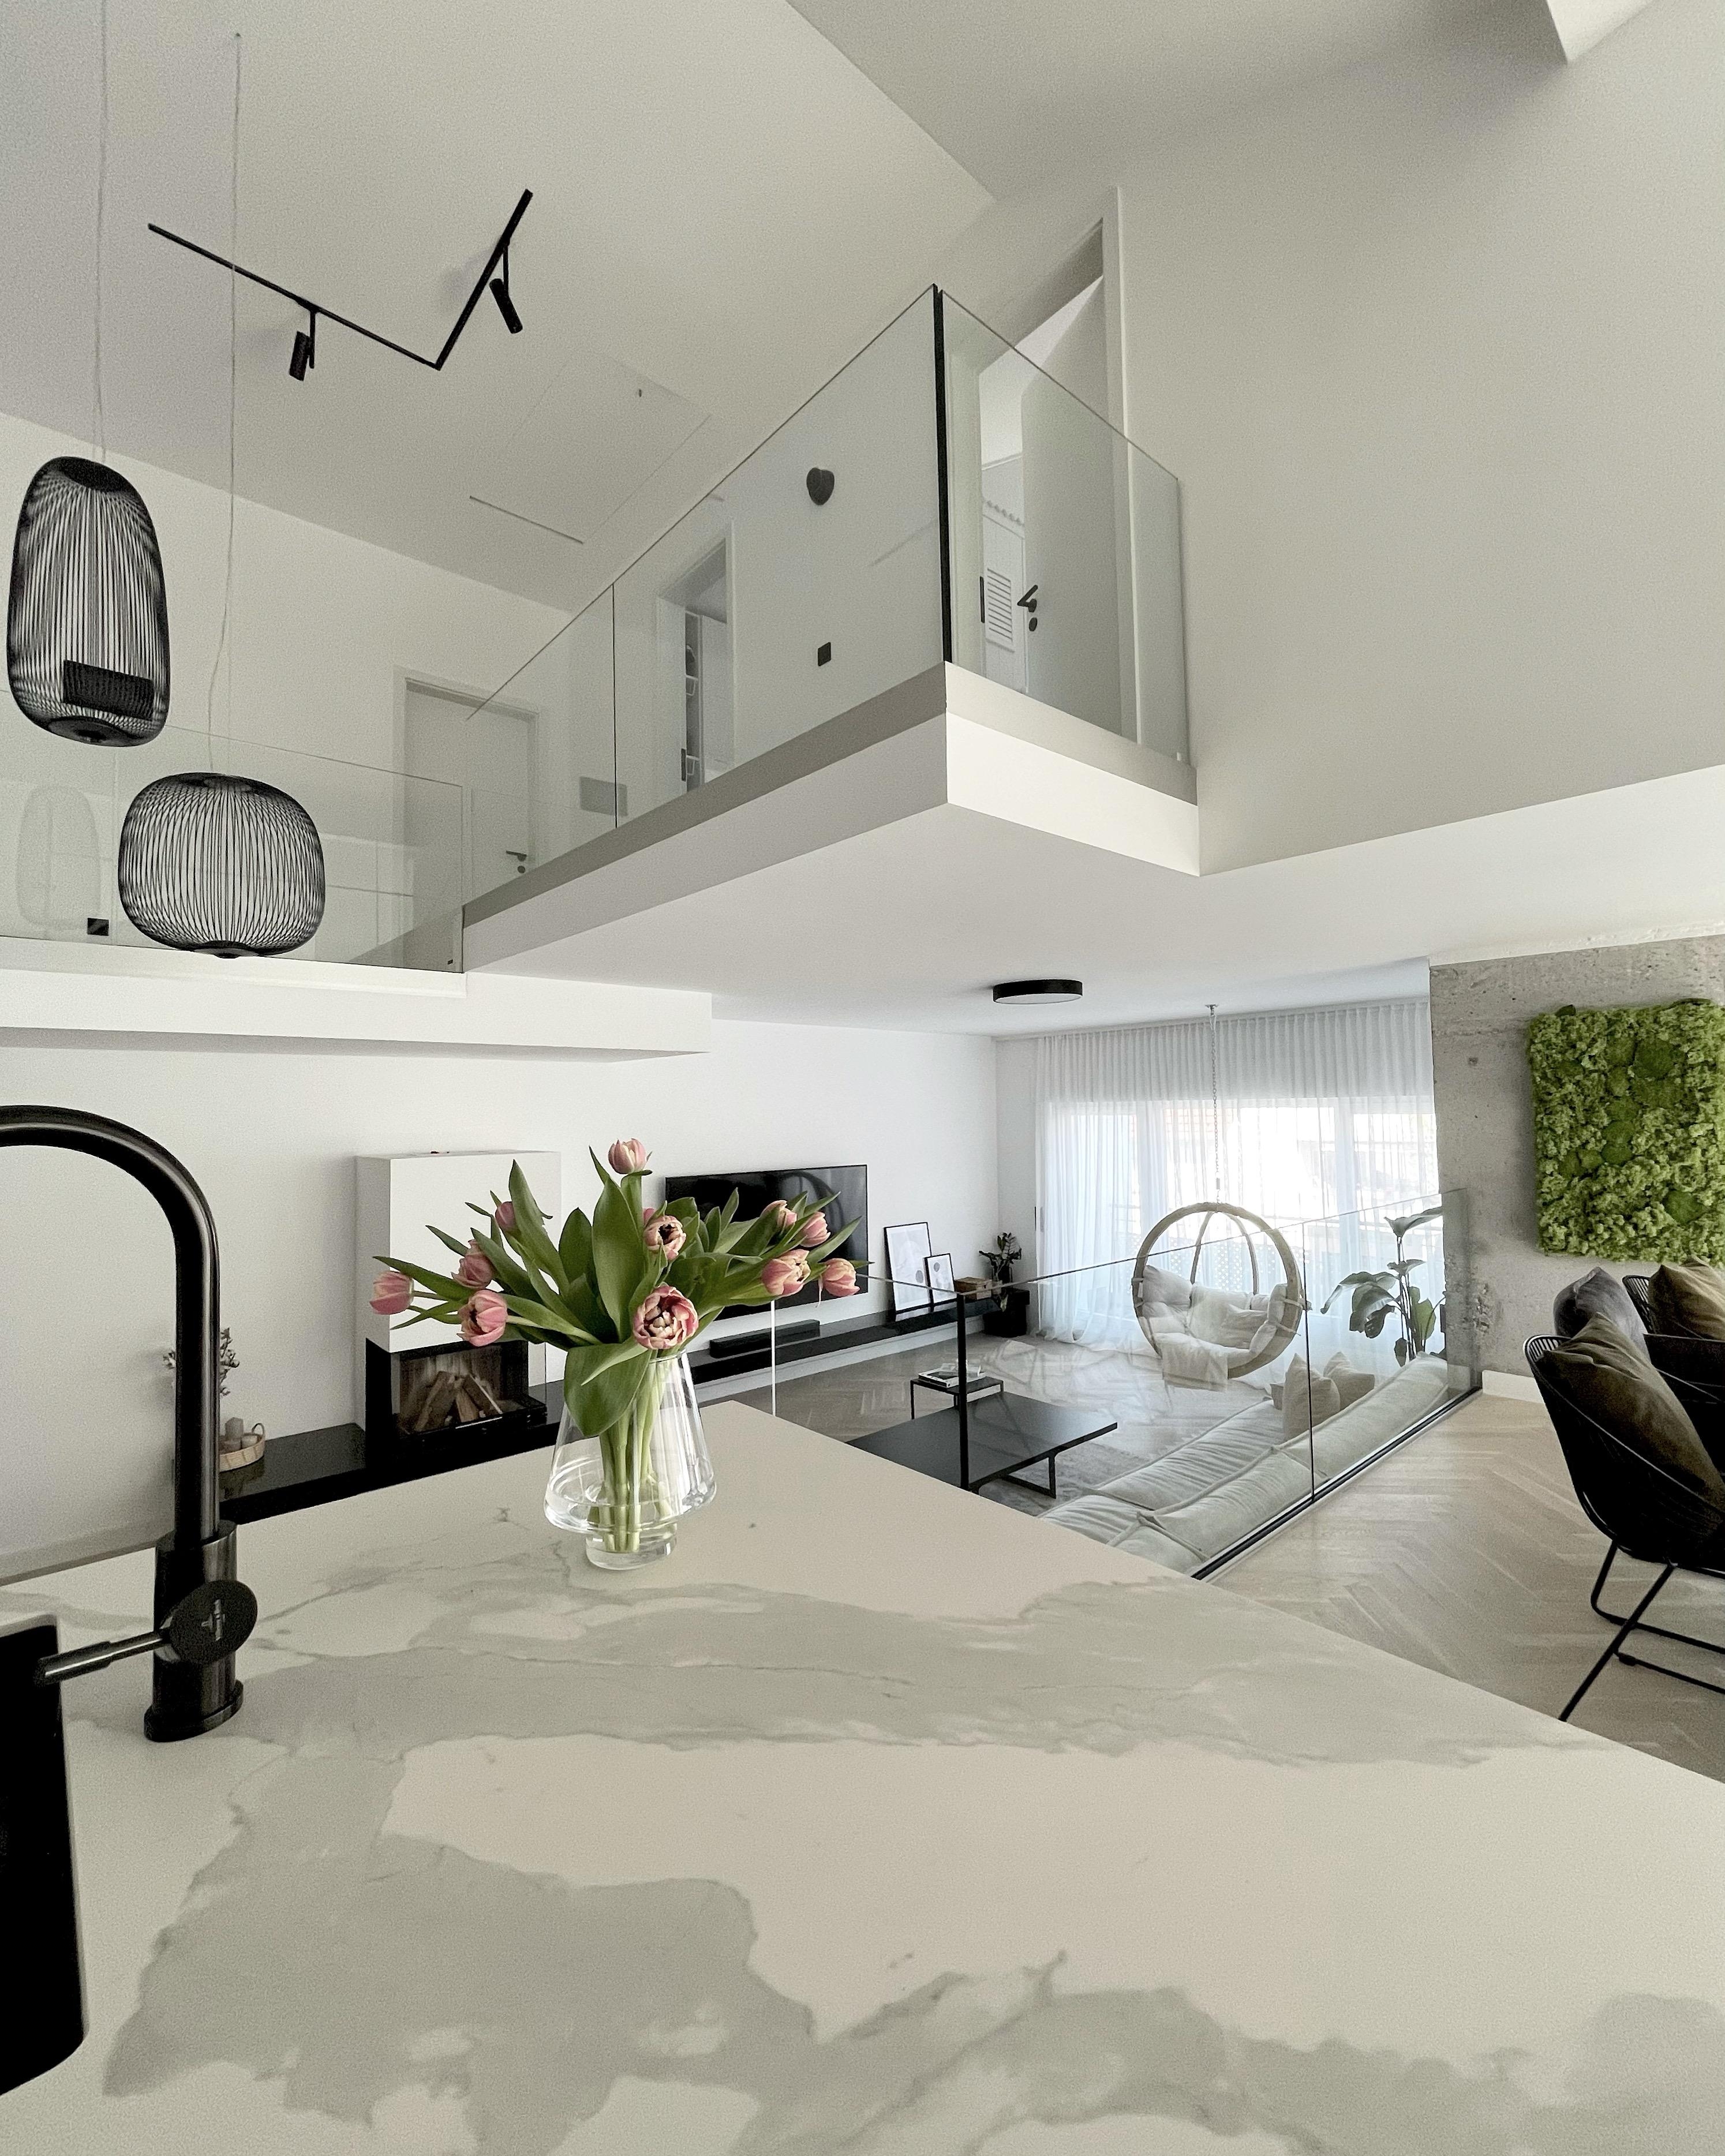 Splitlevel auf höhstem Niveau🤍🖤
#splitlevel #couchmagazib #interiorinspo #homesweethome #architektur #designinspo #home